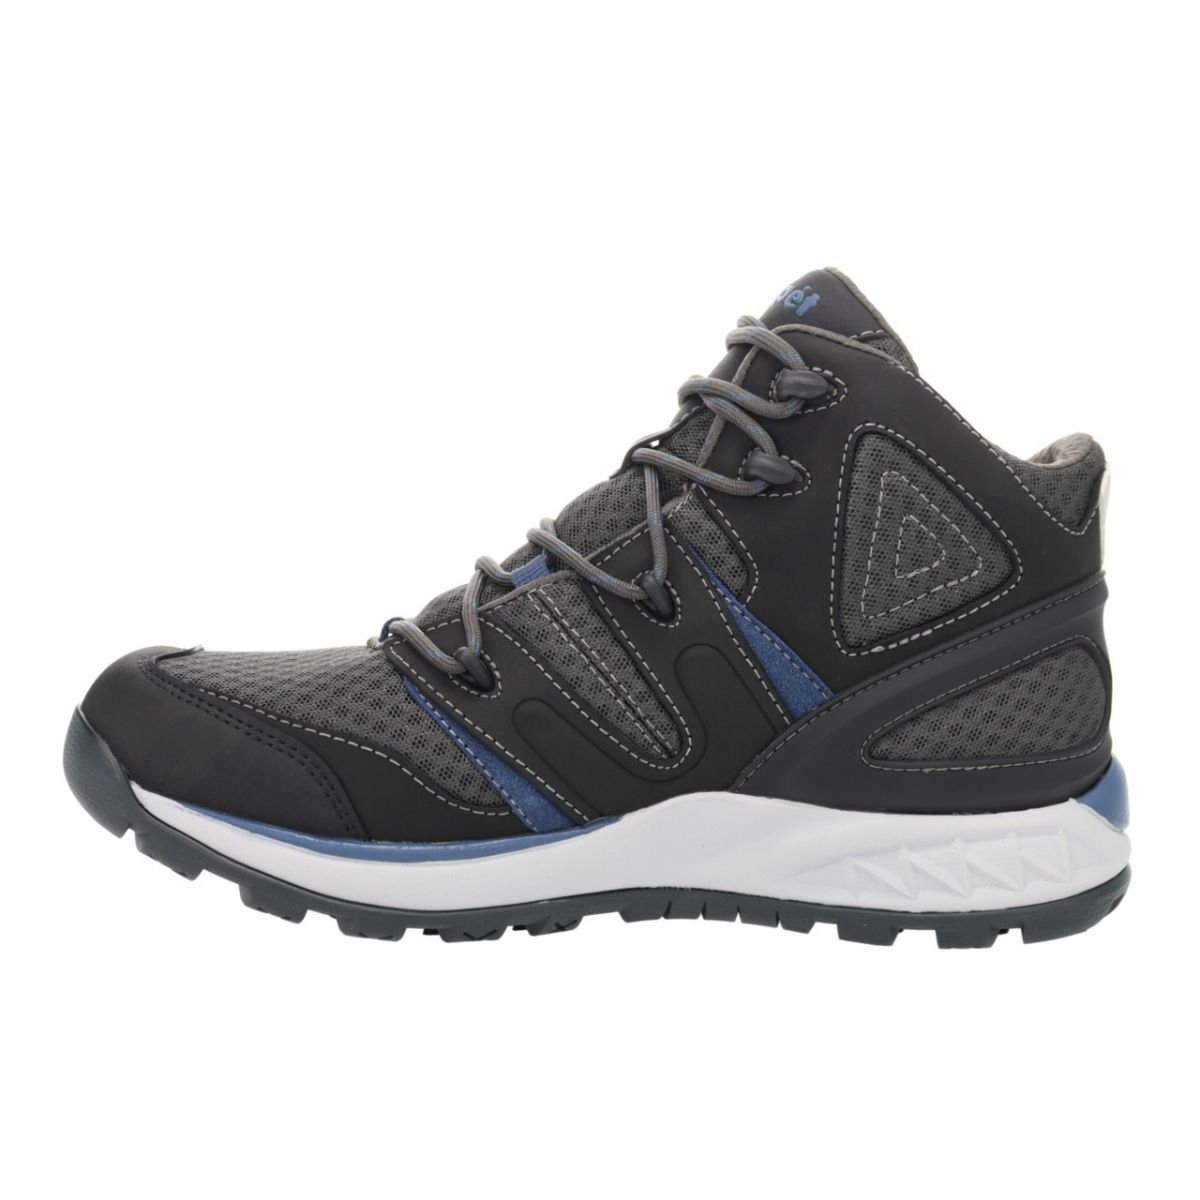 Propet Men's Veymont Waterproof Hiking Boot Grey/Blue - MOA022SGRB GREY/BLUE - GREY/BLUE, 9